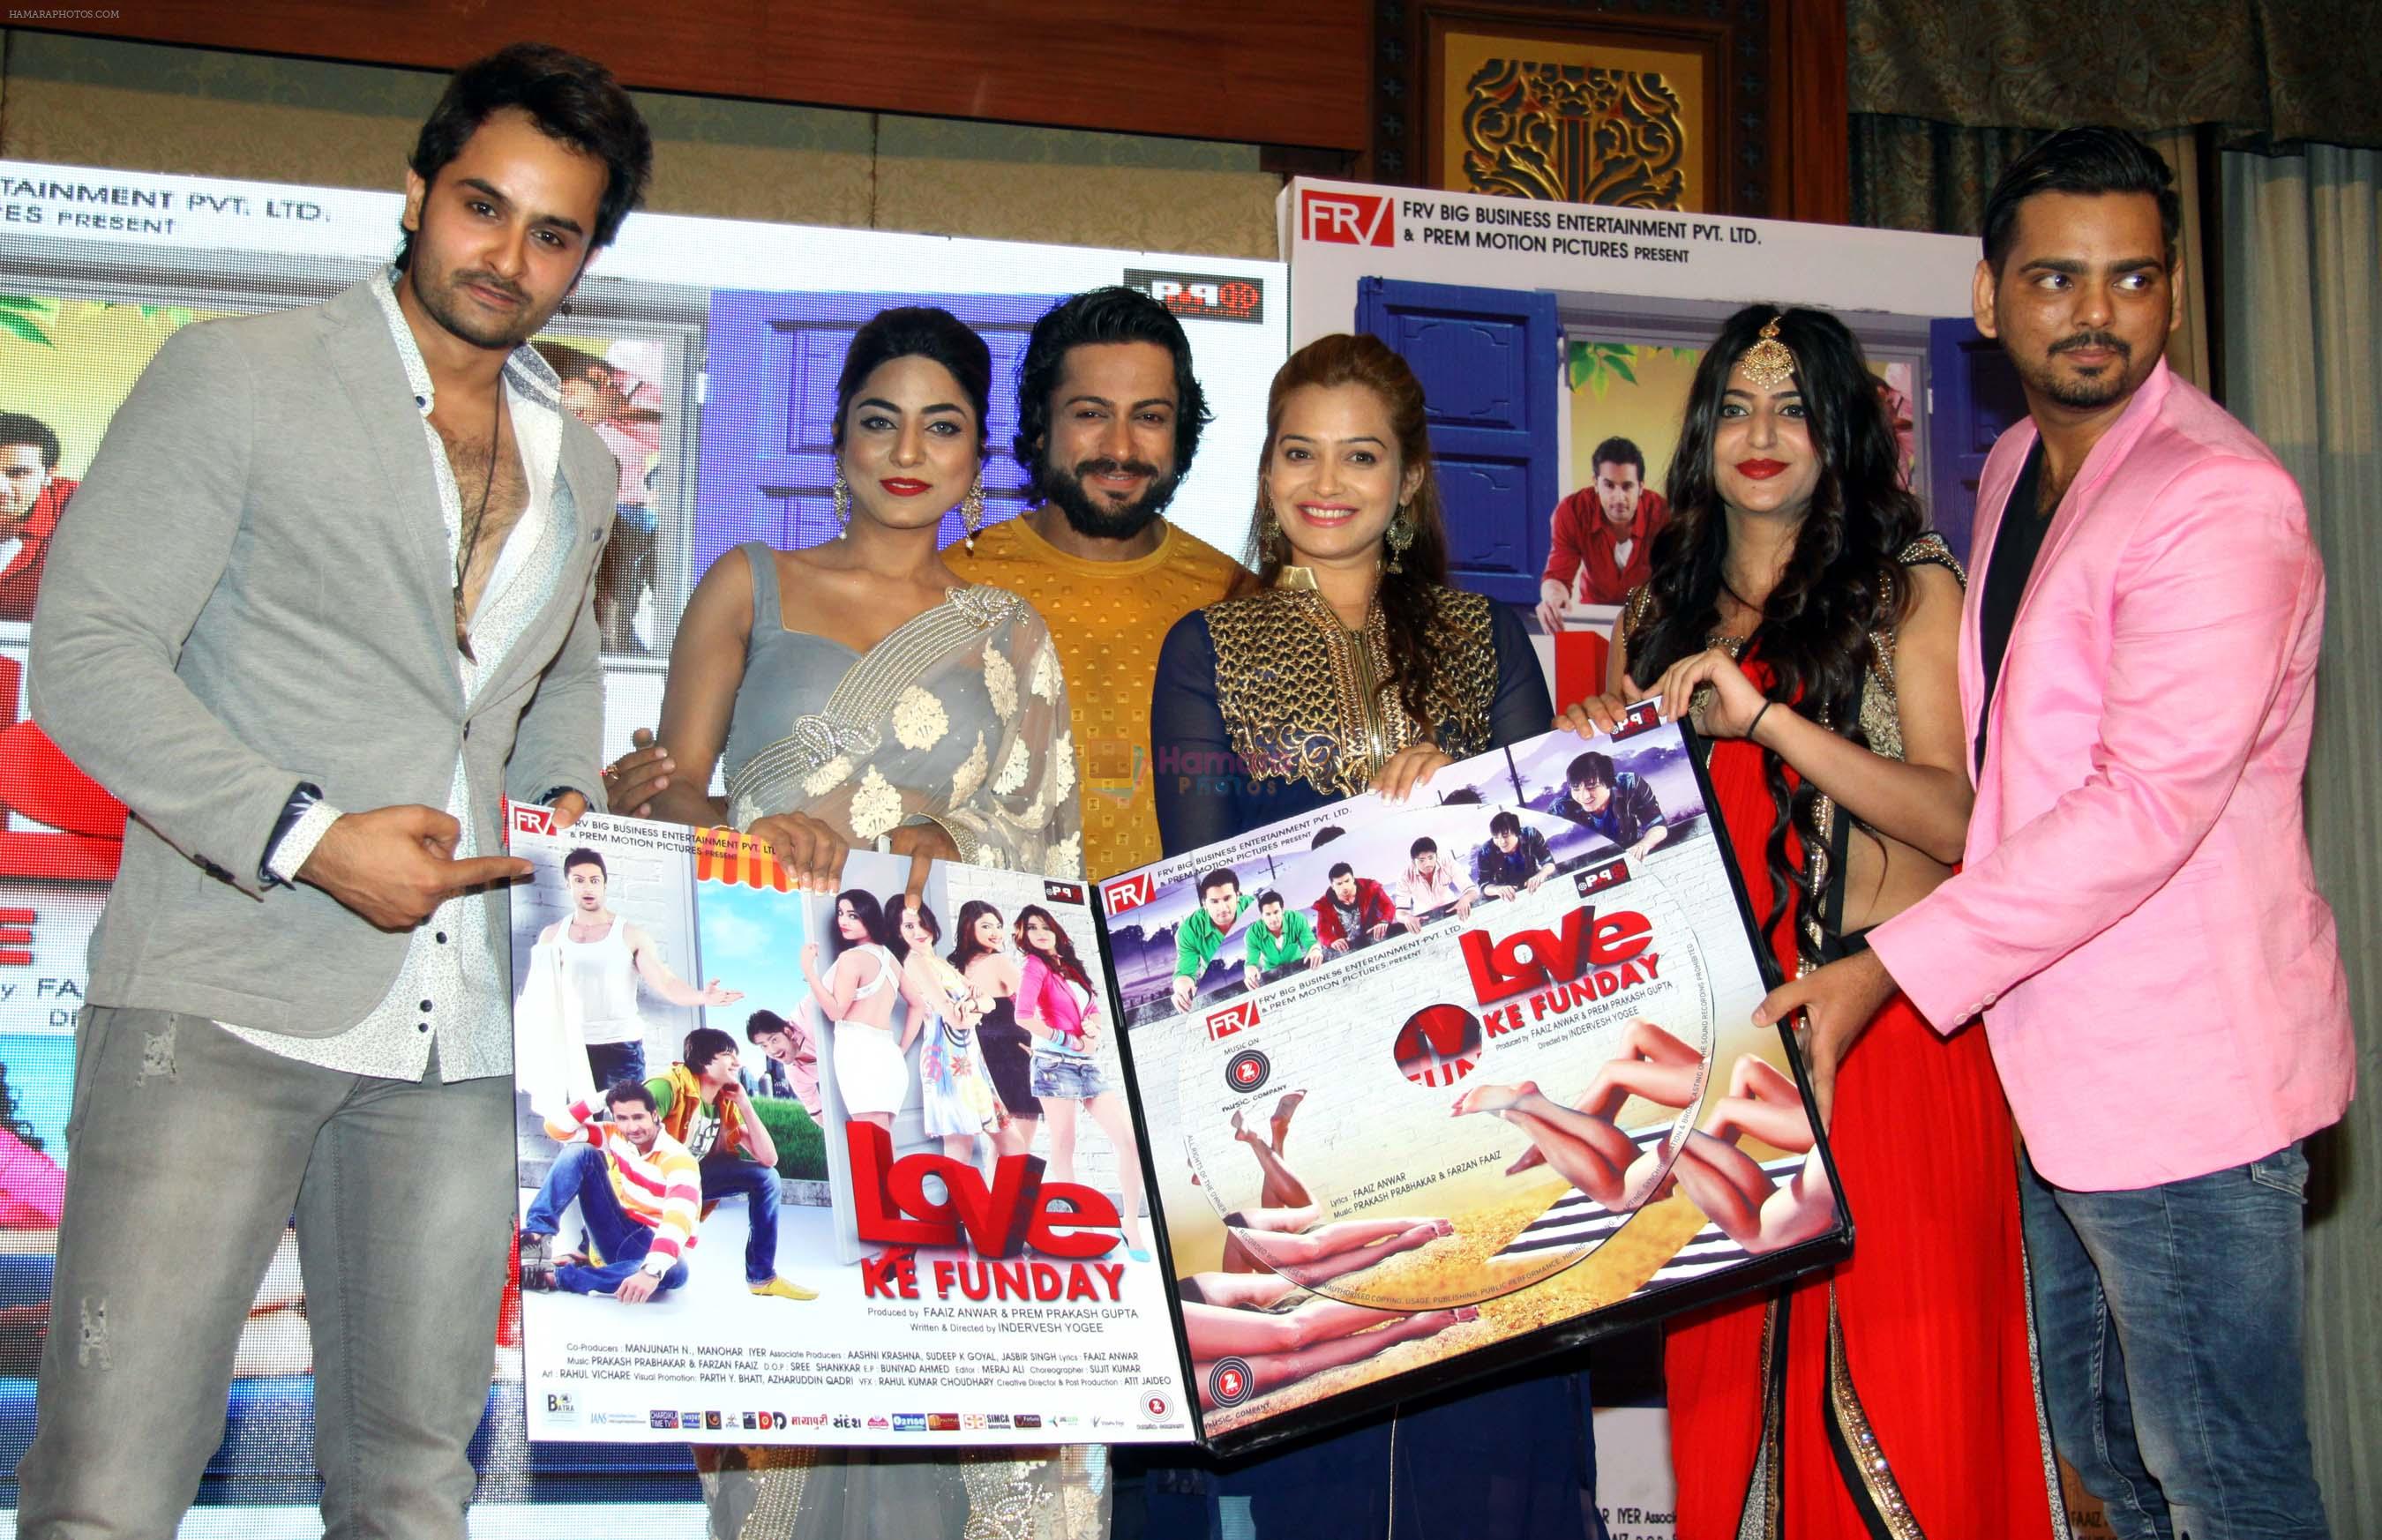 rishank tiwari,ritika gulati,shaleen bhanot,samiksha bhatnagar,sufi gulati & harshvardhan joshi at Love Ke Funday film launch in Mumbai on 22nd June 2016